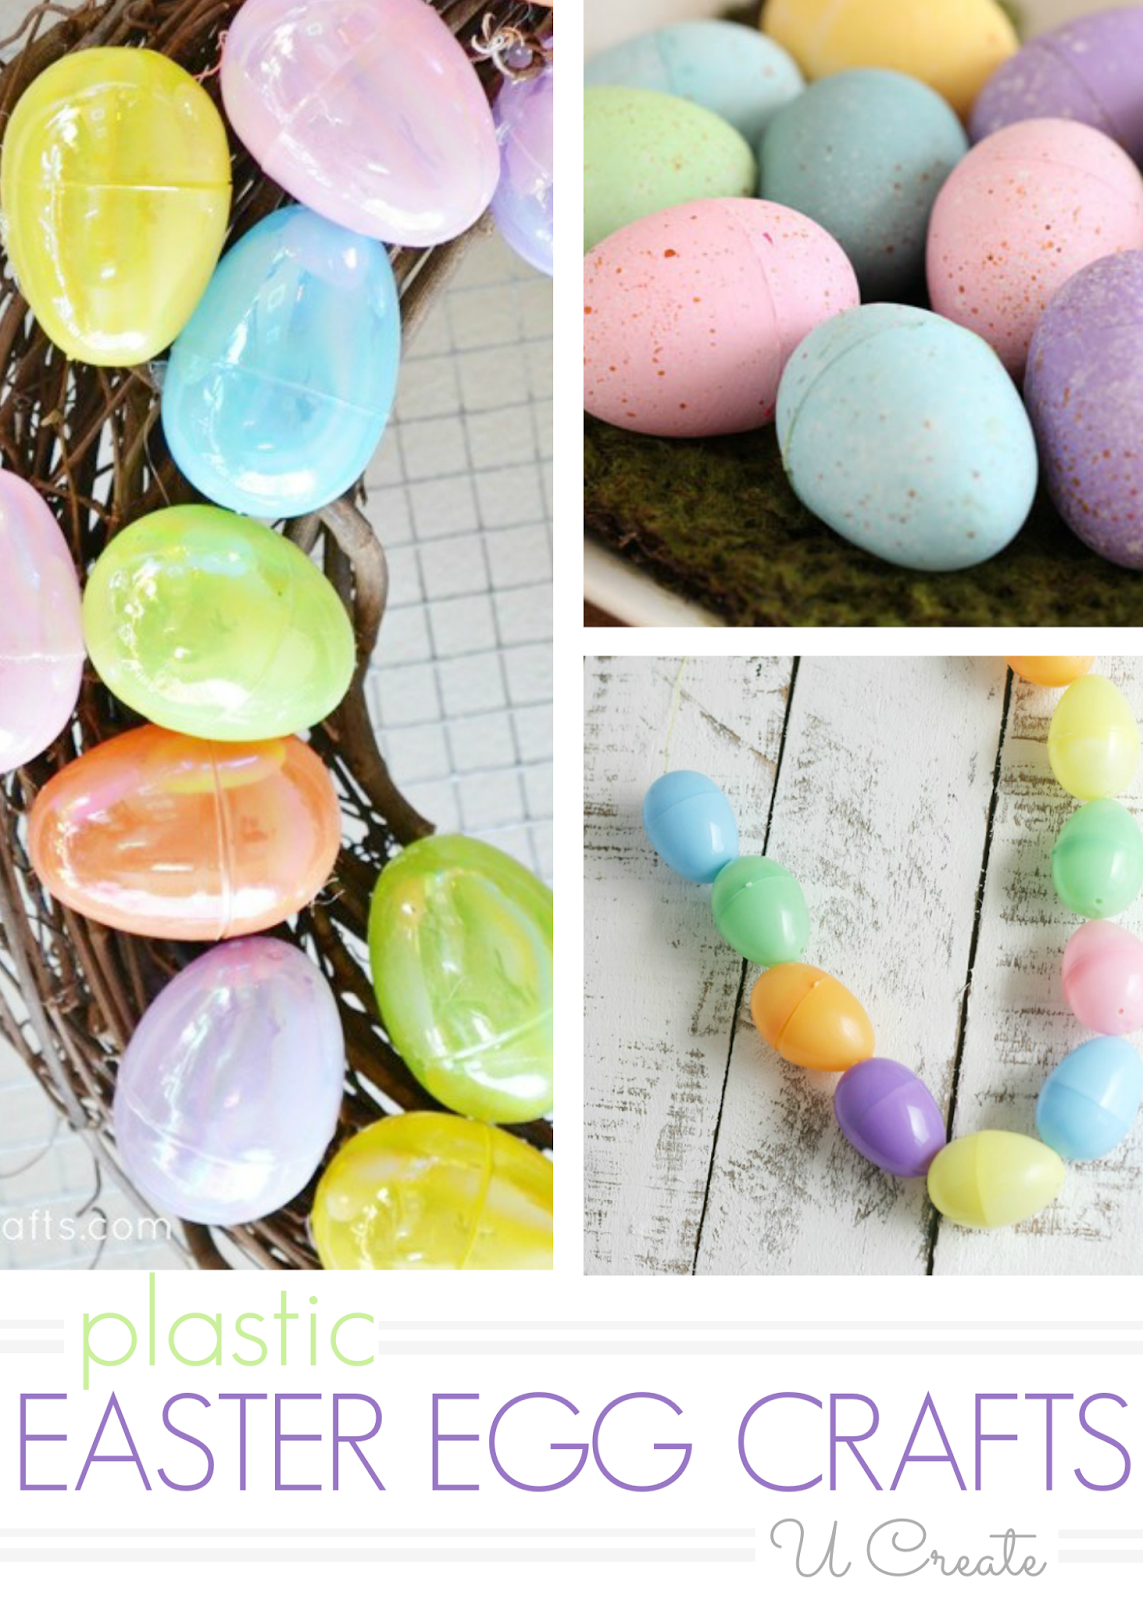 http://3.bp.blogspot.com/-O2hi2XsElTs/U0SUfoP8OLI/AAAAAAAANeM/97GLS1zg25w/s1600/Plastic-Easter-Egg-Crafts.png